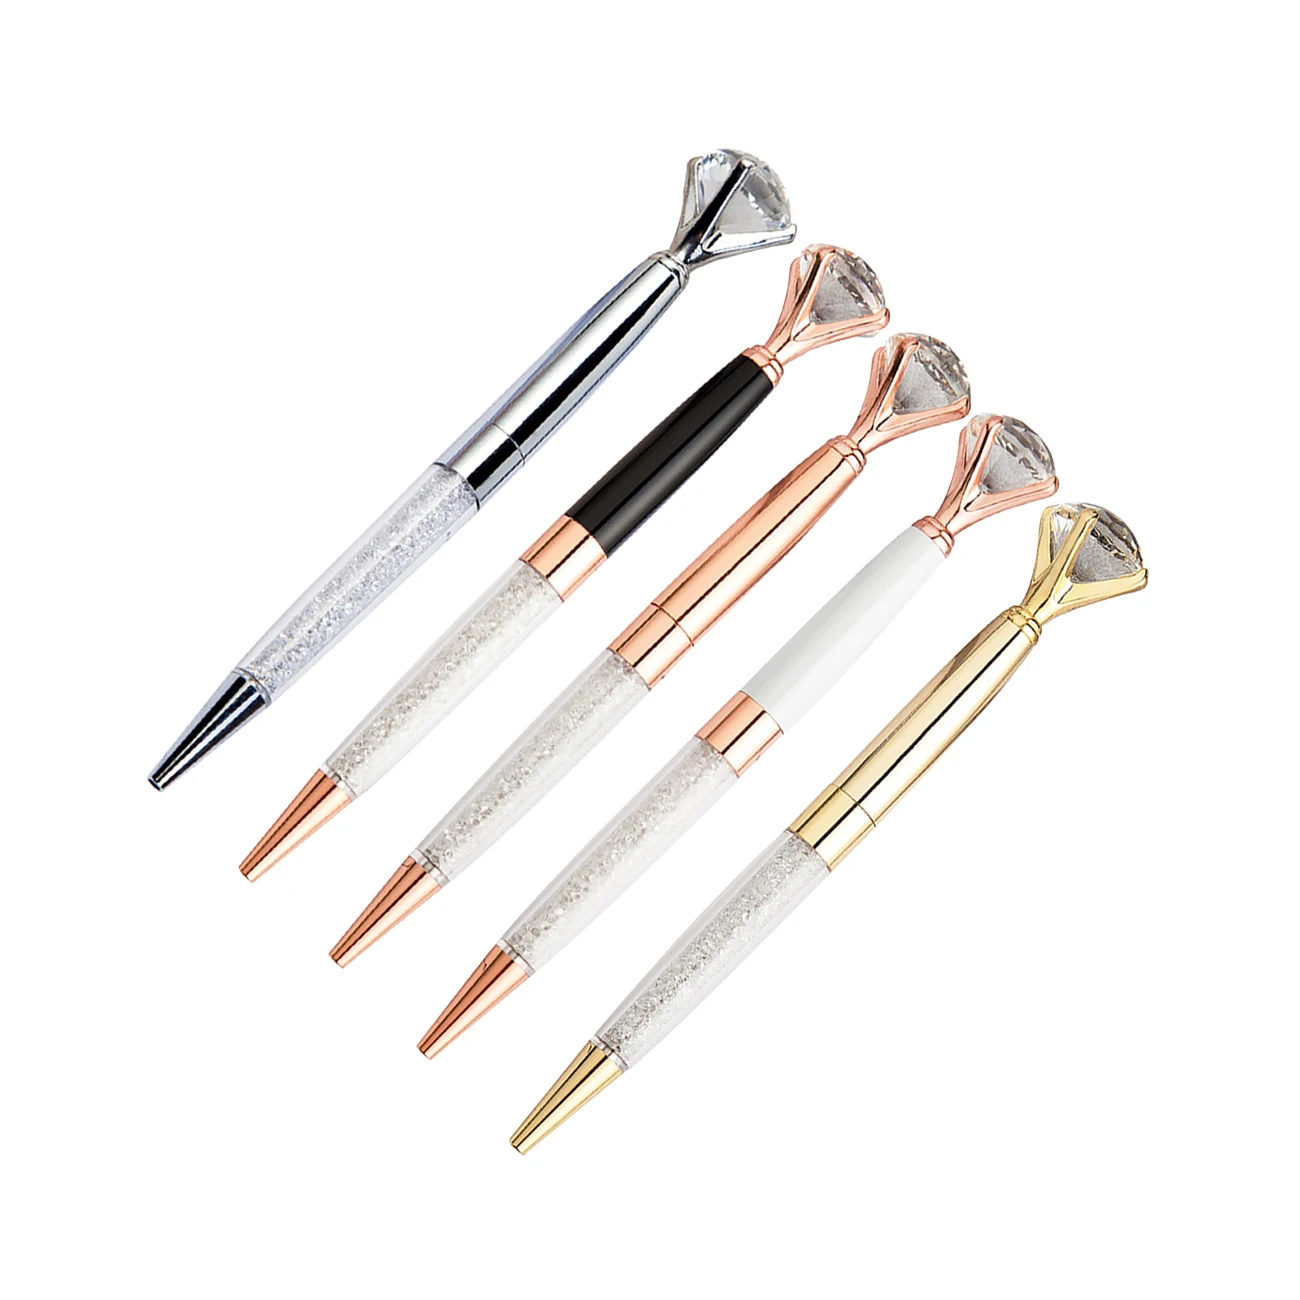 Fashion Crystal Metel Ballpoint Pen Good Gift Bling Diamond On the Top 